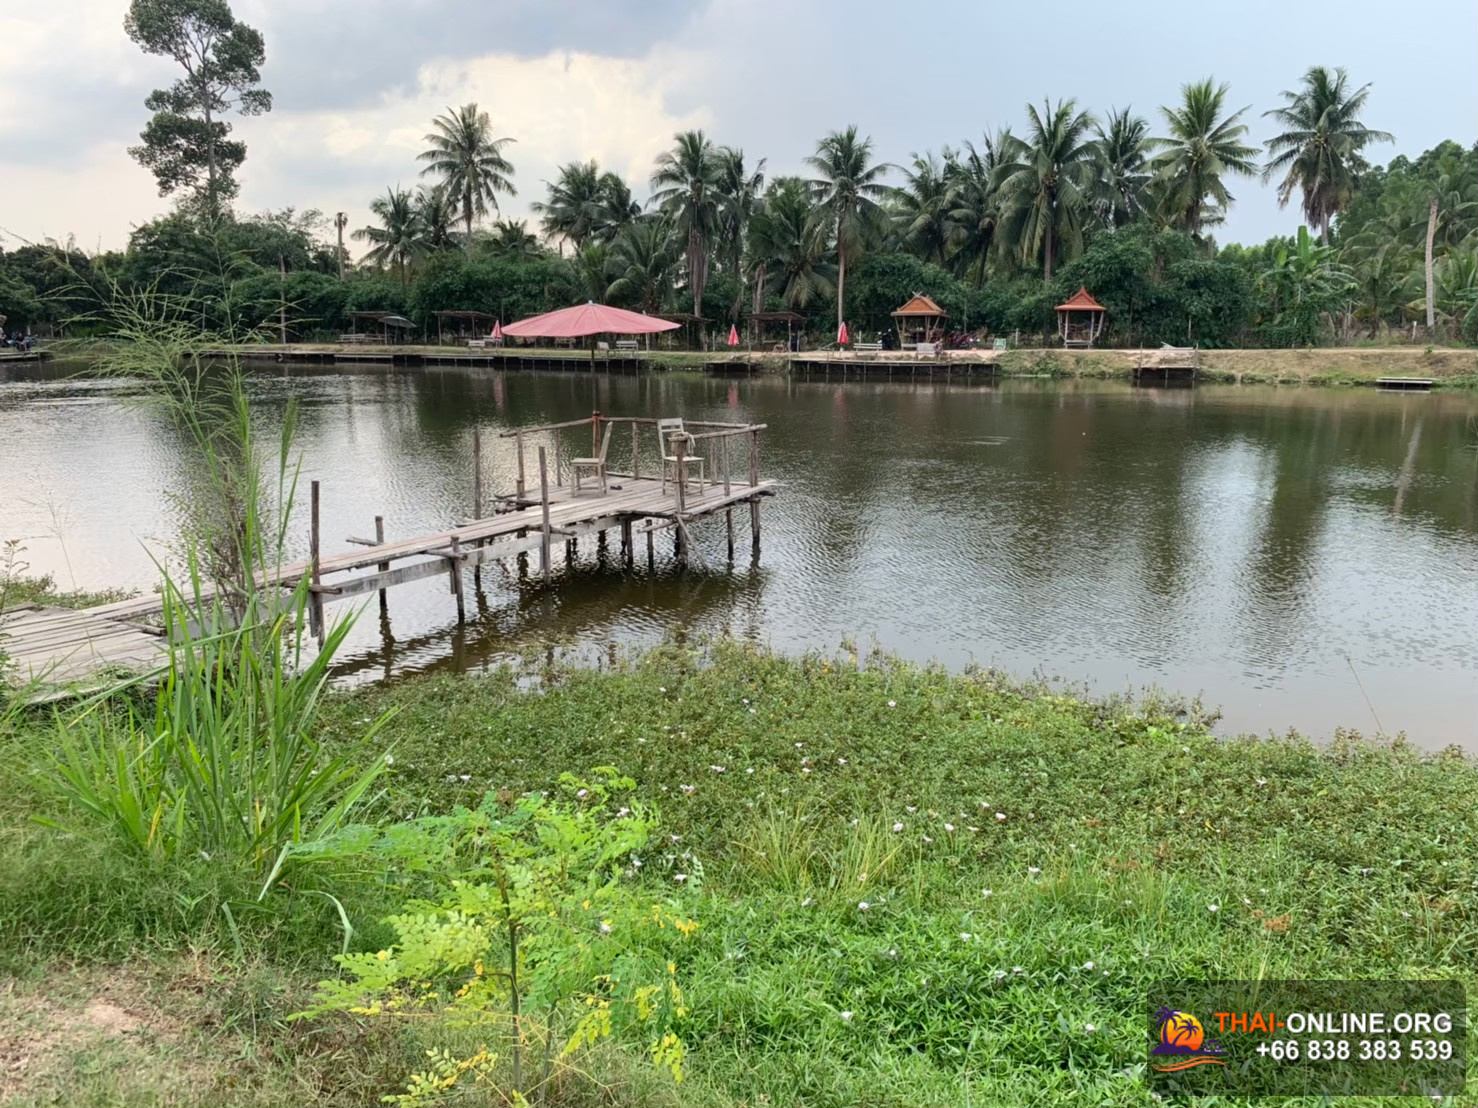 Барбекю на озере и рыбалка экскурсия компании Seven Countries из Паттайи Таиланд фото 20